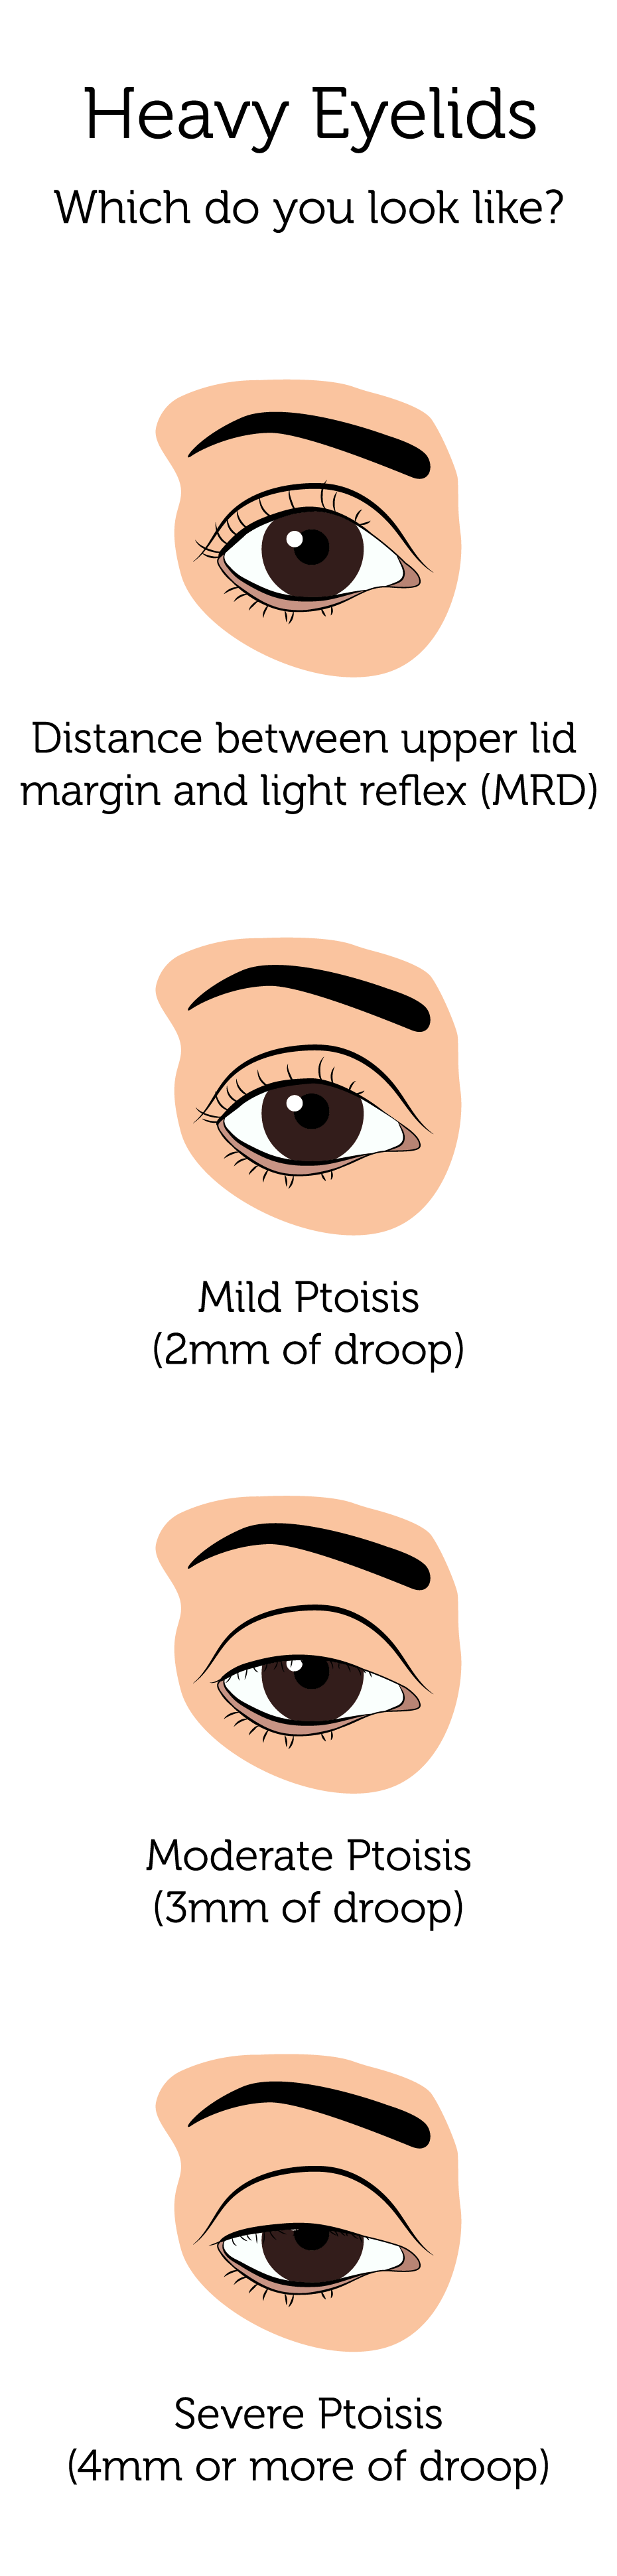 prominent eyelids